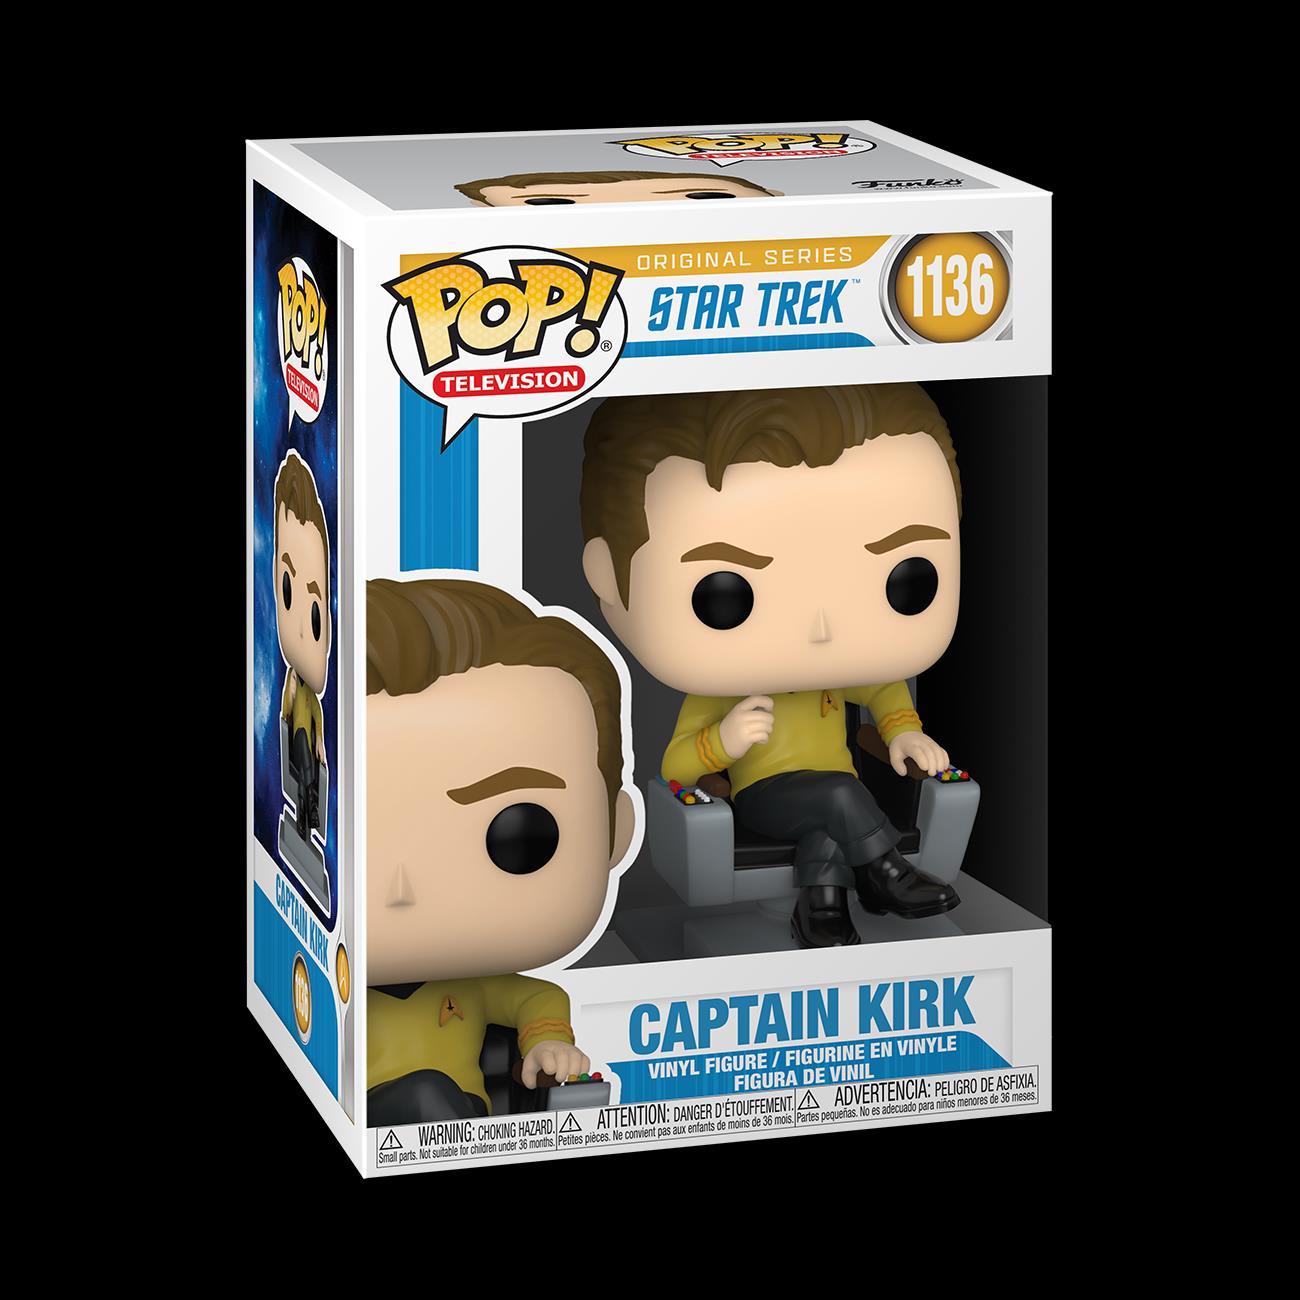 Funko Pop! TV: Star Trek: The Original Series - Captain Kirk